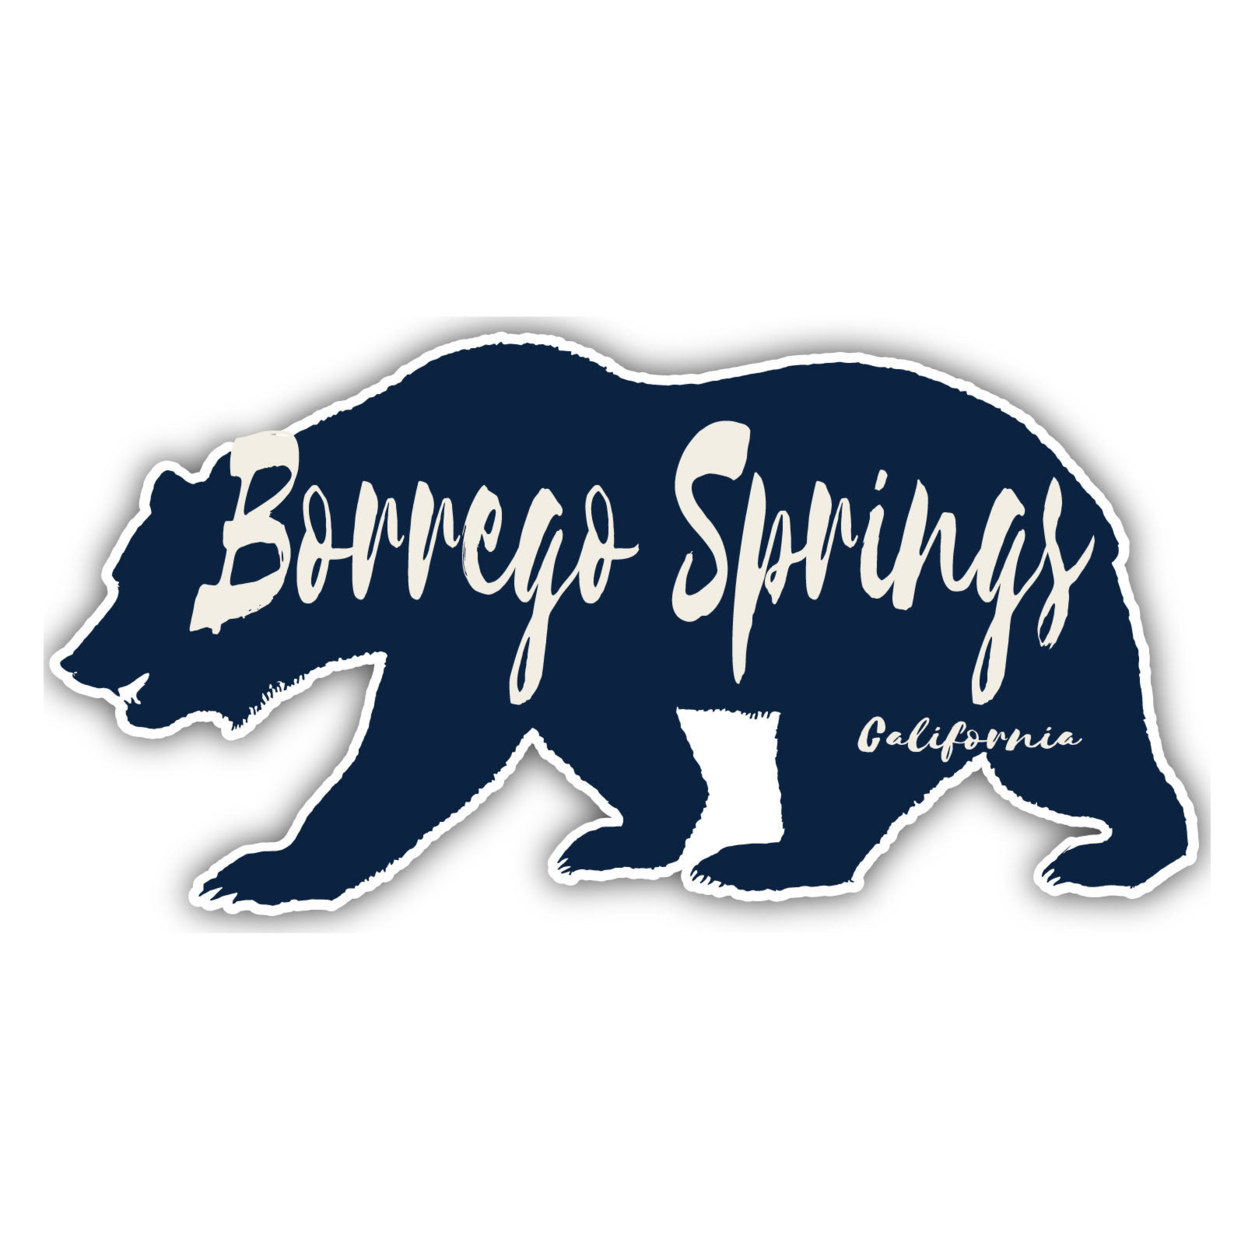 Borrego Springs California Souvenir Decorative Stickers (Choose Theme And Size) - 4-Pack, 6-Inch, Bear